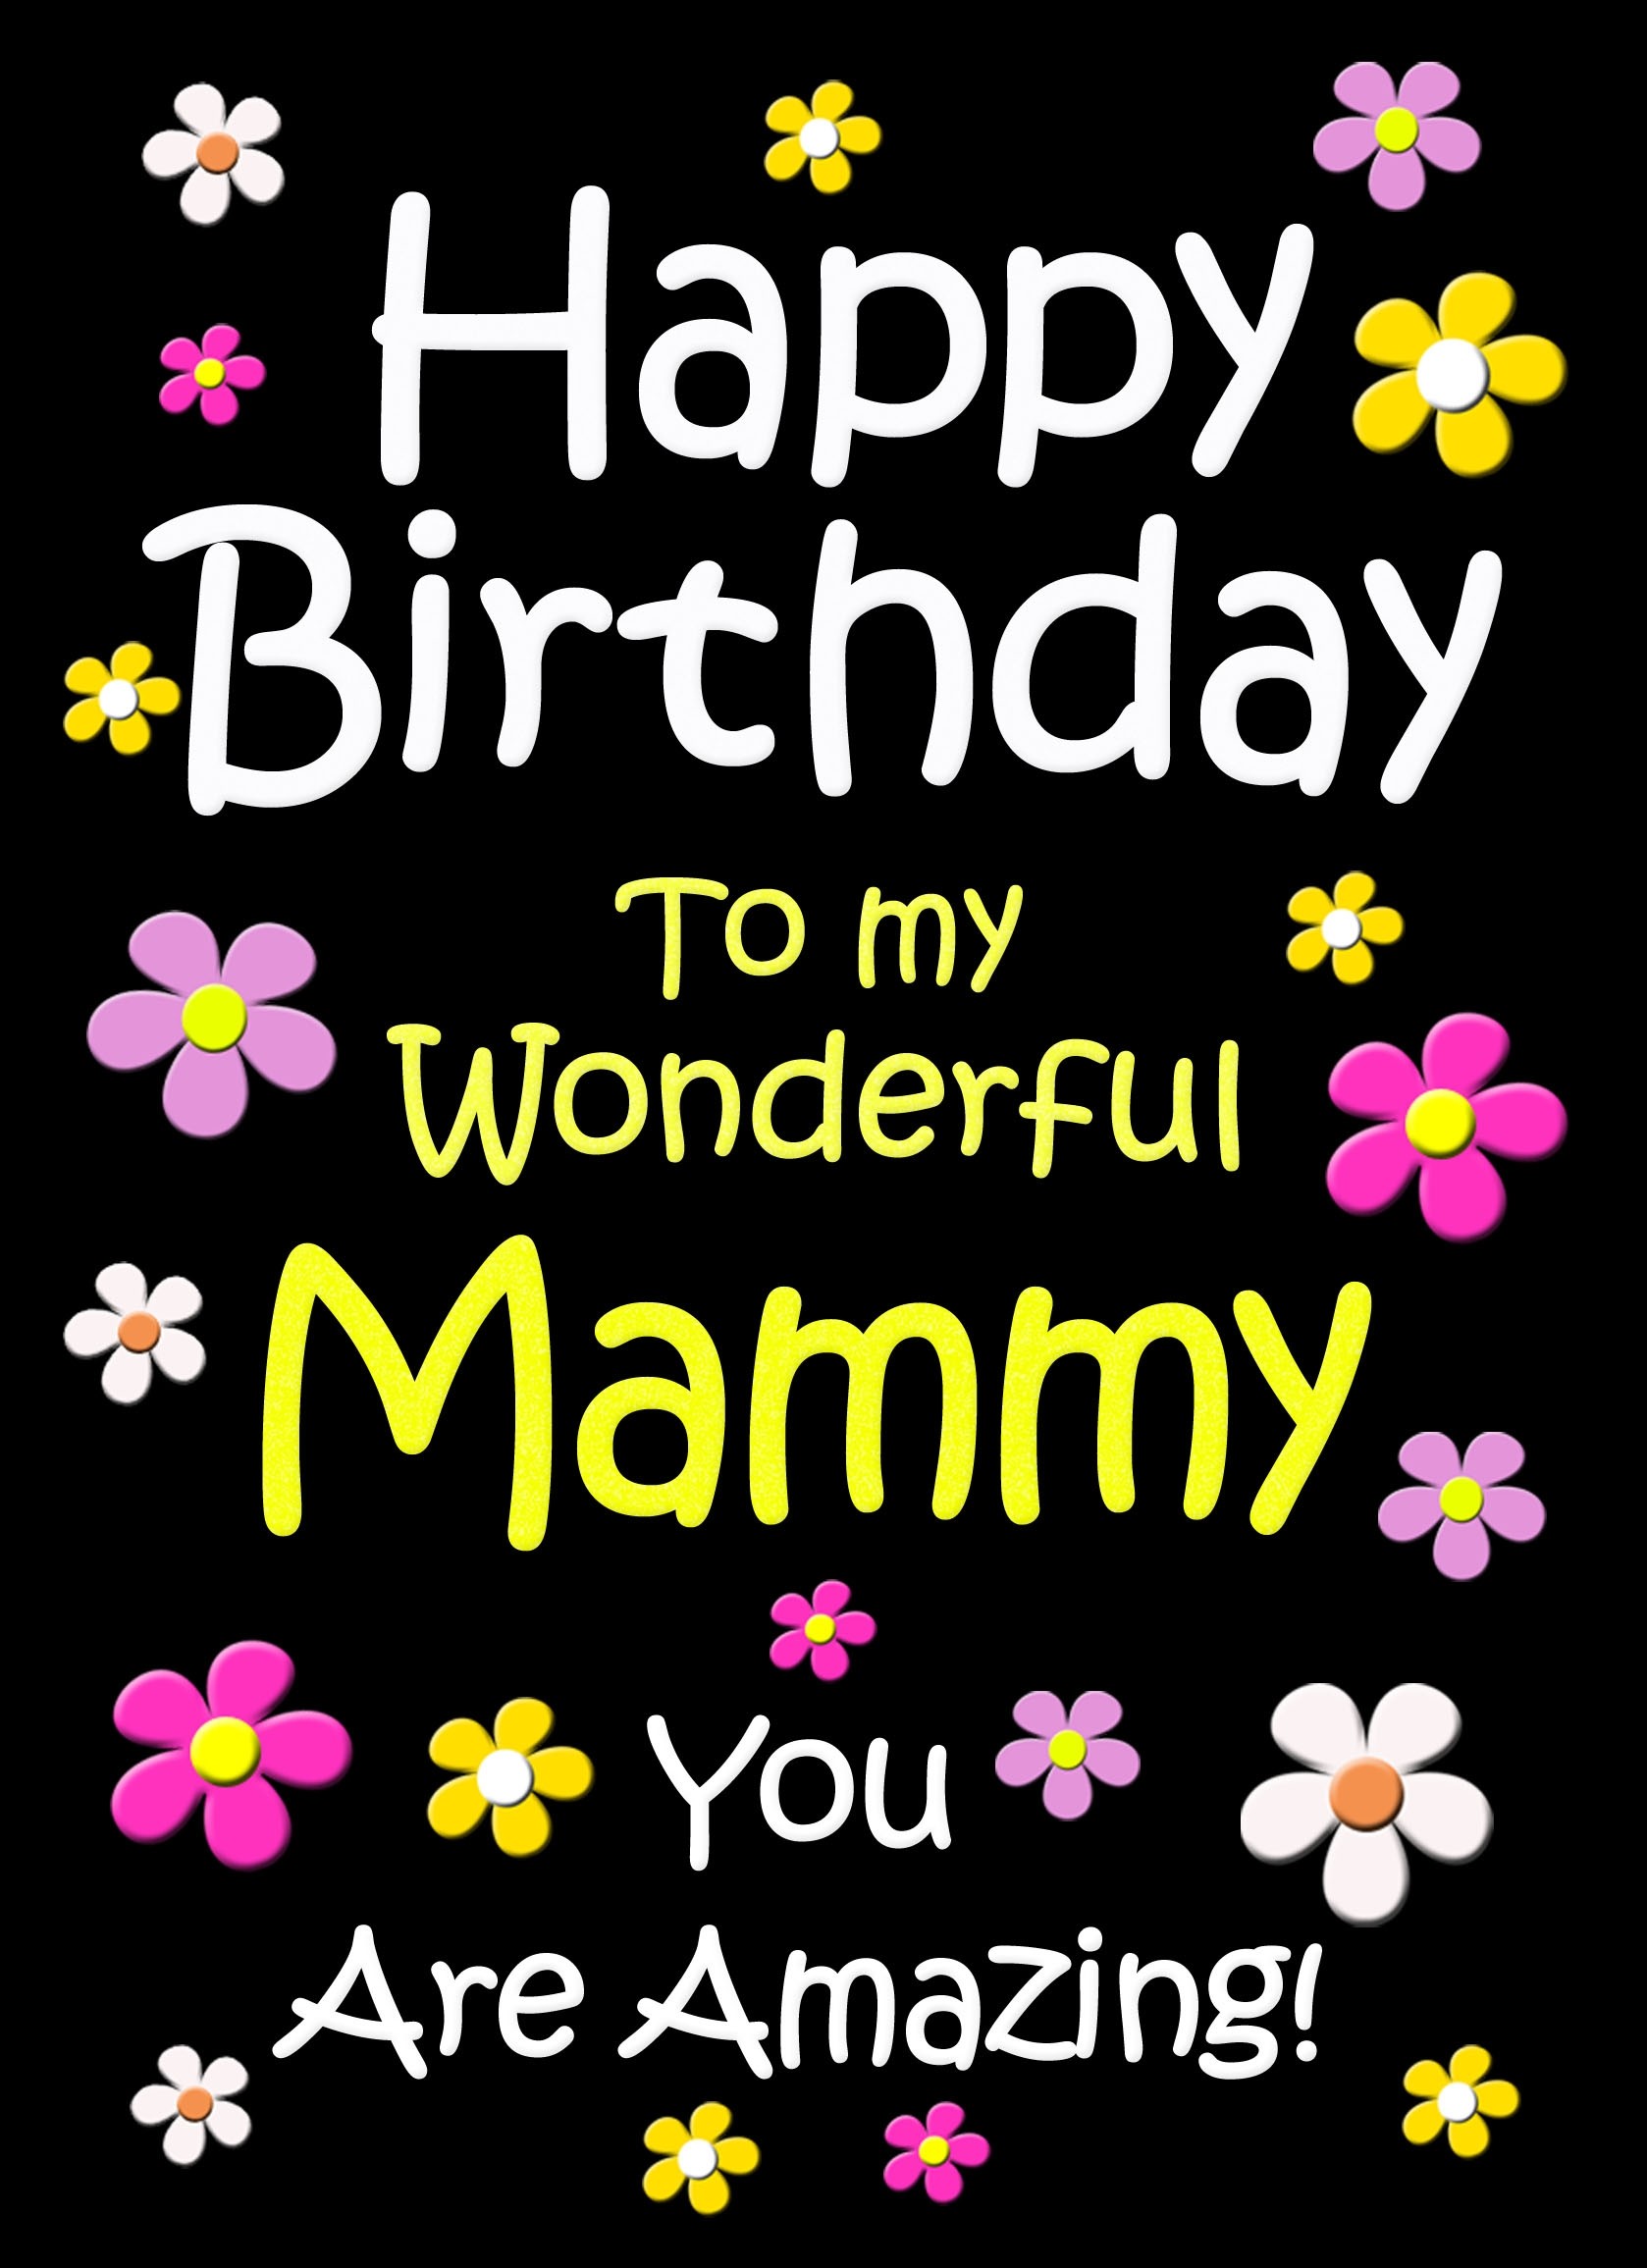 Mammy Birthday Card (Black)